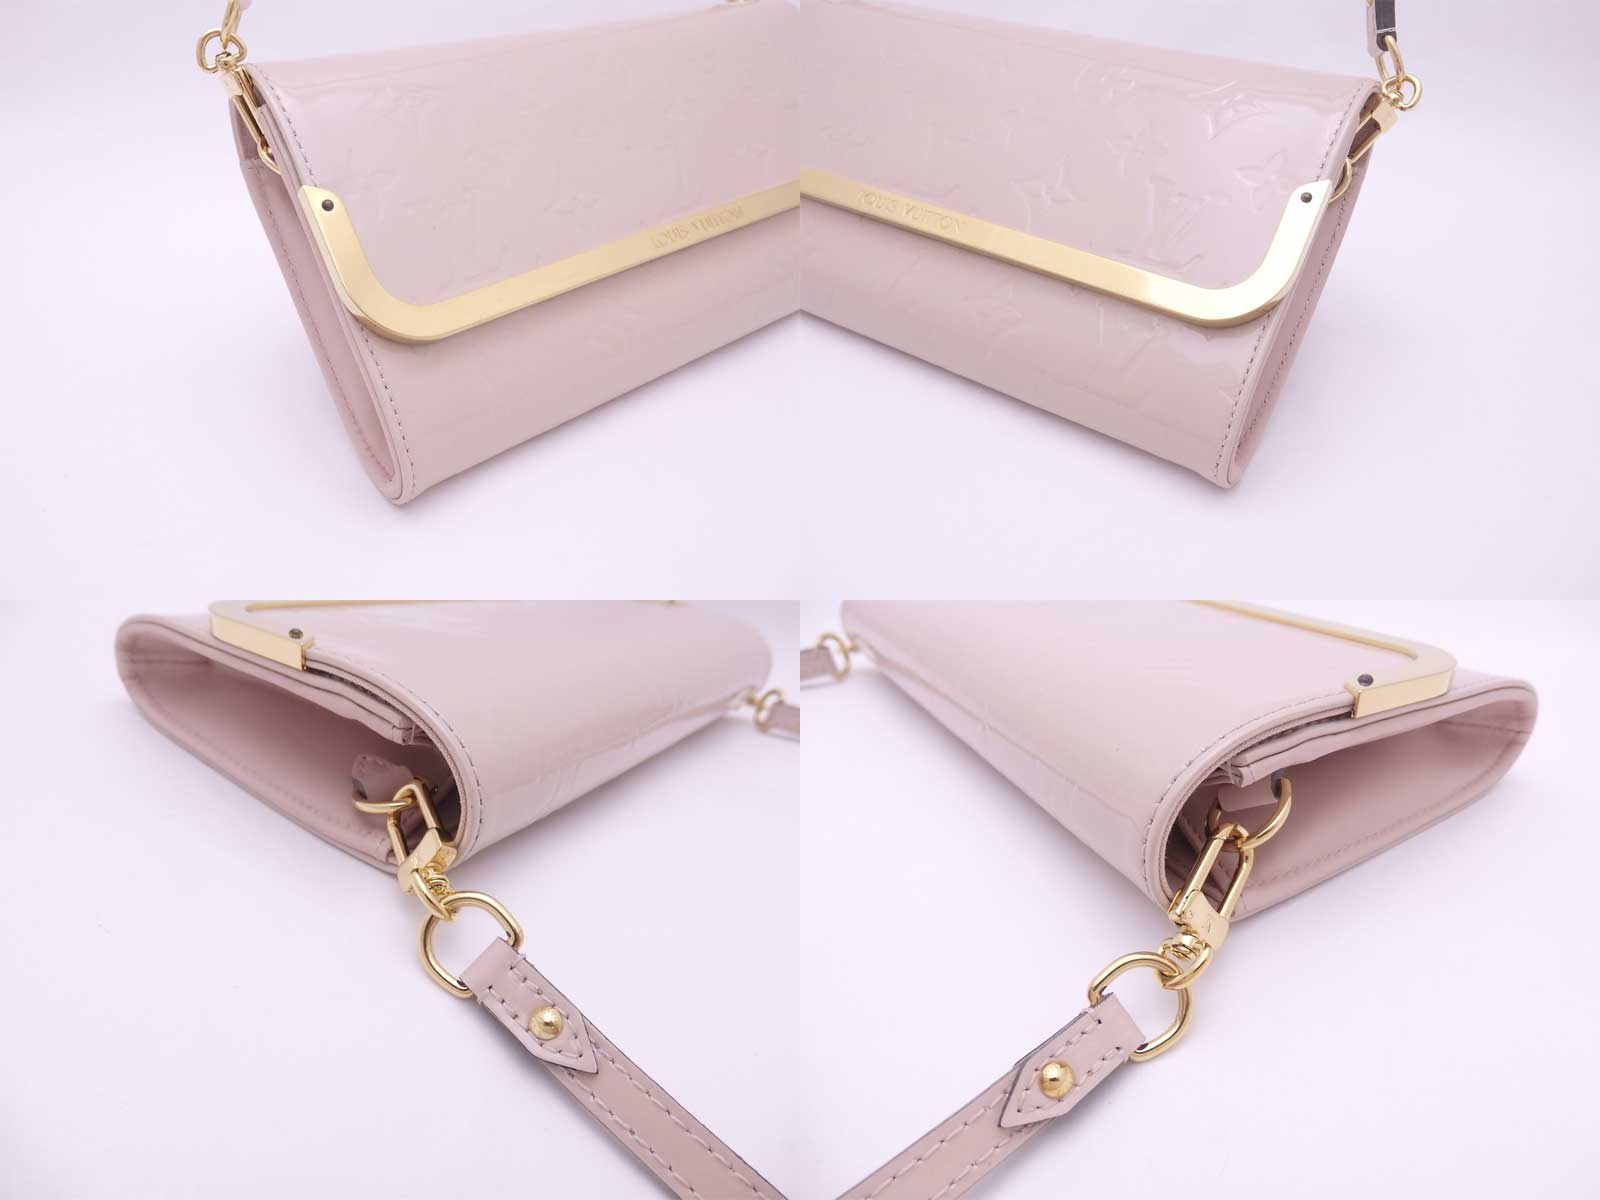 Auth Louis Vuitton Monogram Vernis Rossmore MM Shoulder Bag Light Pink e43953 | eBay